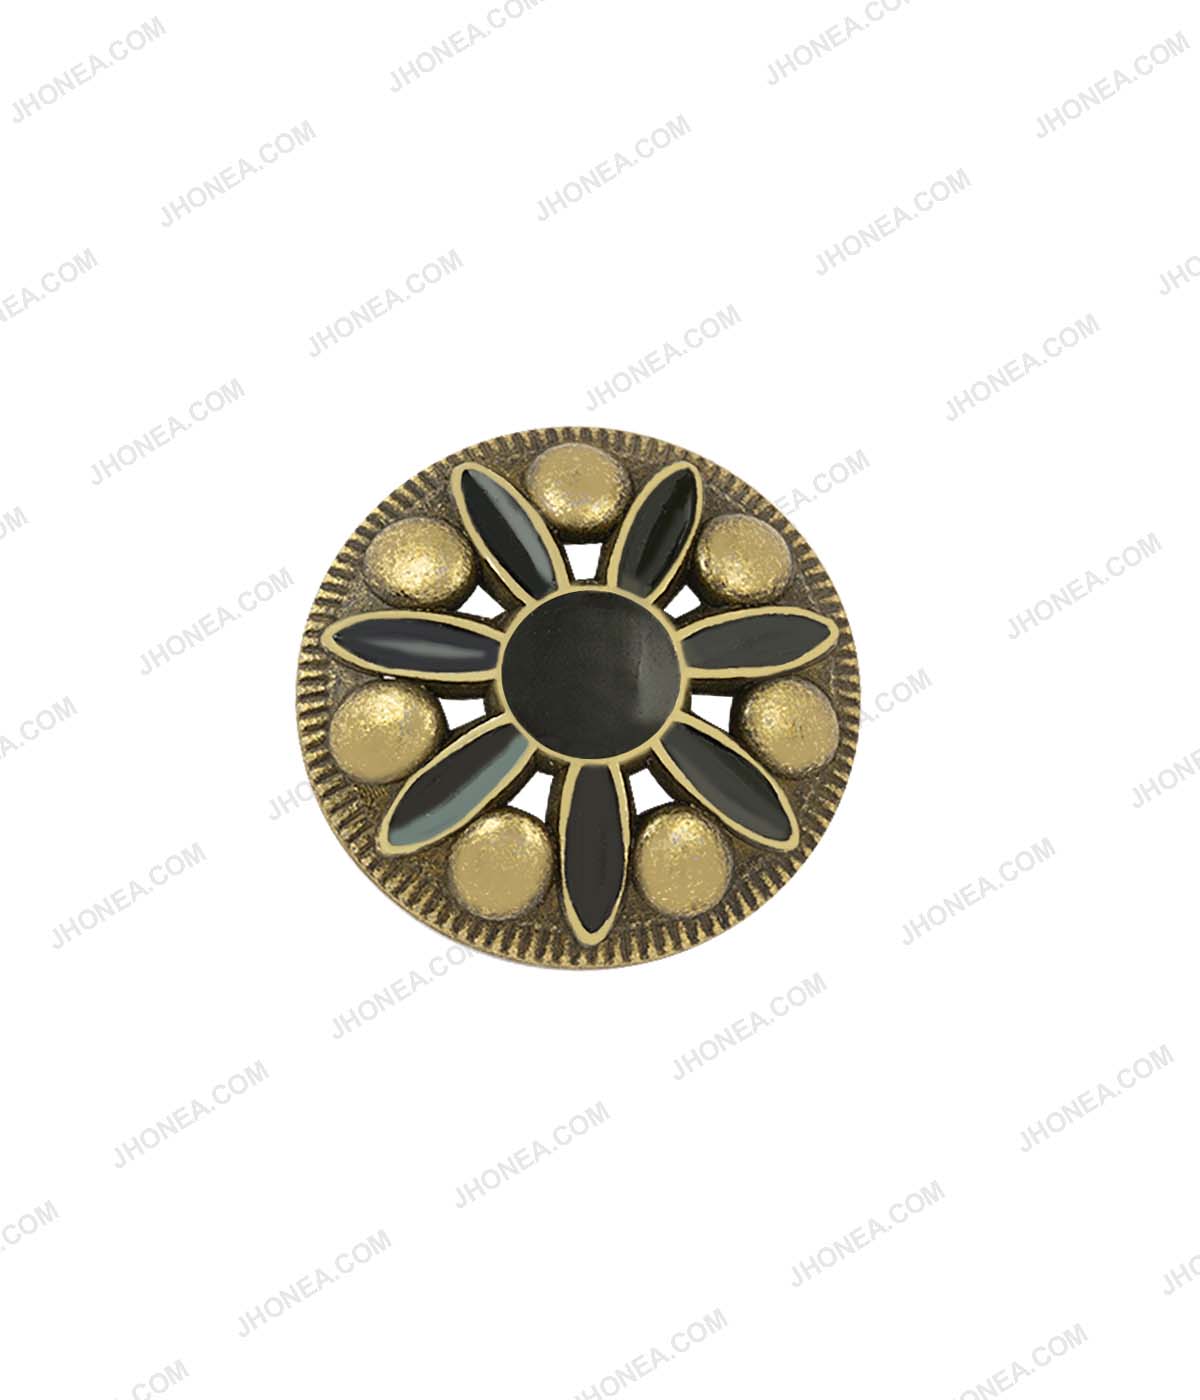 Antique Brass with Black Enamel Flower Petal Design Metal Buttons